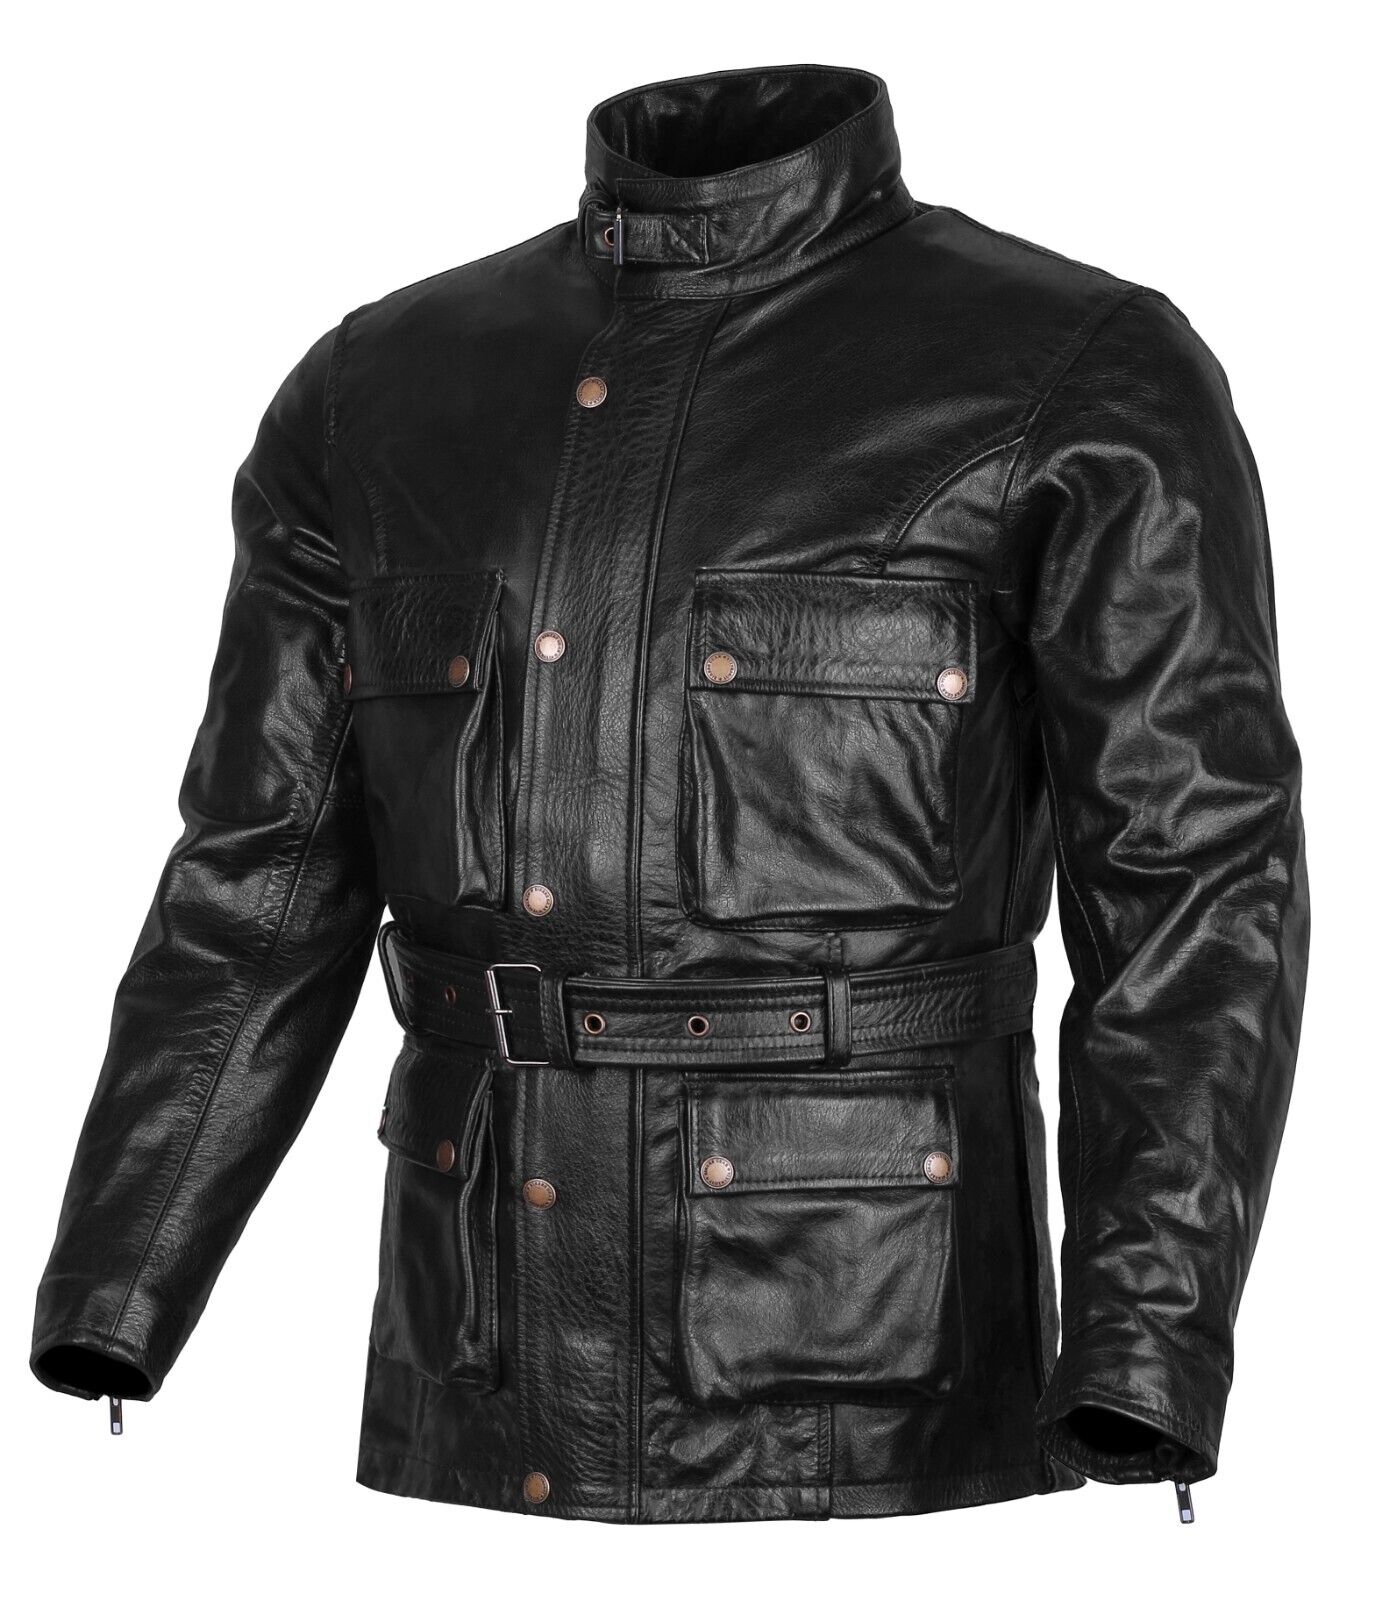 Biker Men's Long Leather Jacket Motorcycle Armoured Vintage Trialmaster Wax Coat